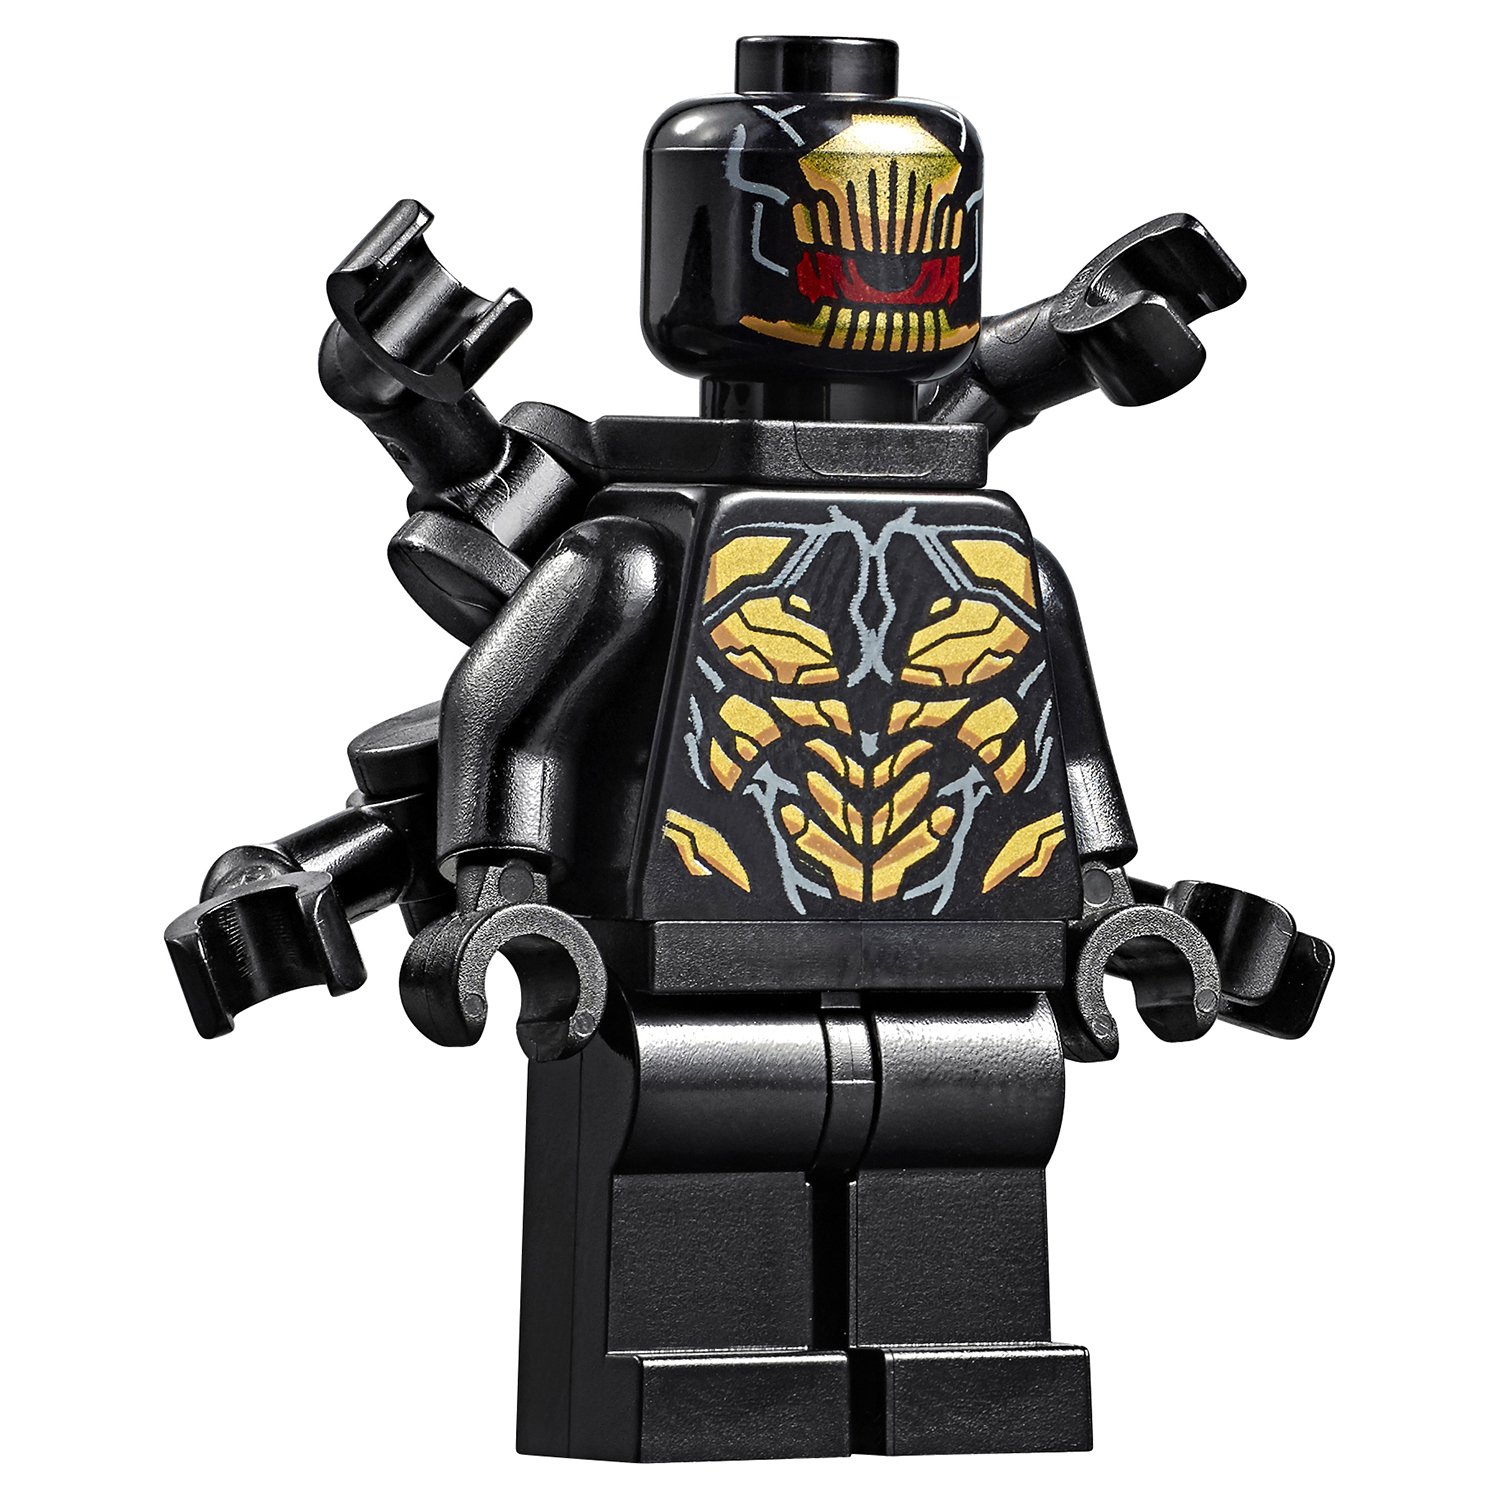 Конструктор Lego® Супер Герои - Битва на базе Мстителей  